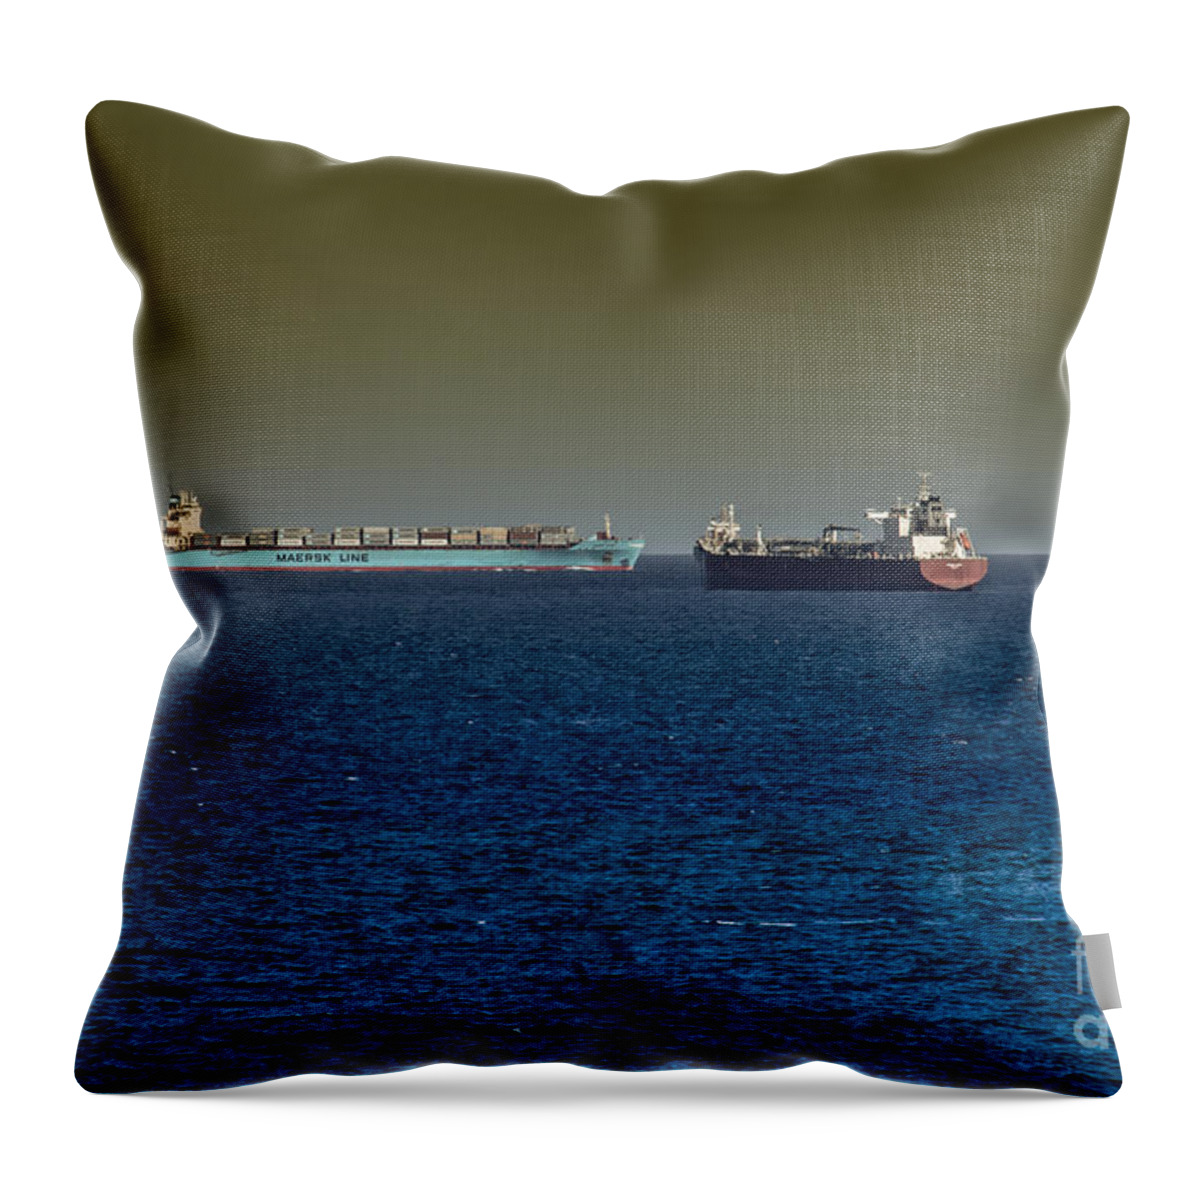 Ship Throw Pillow featuring the photograph Cargo Steamer by Rene Triay FineArt Photos